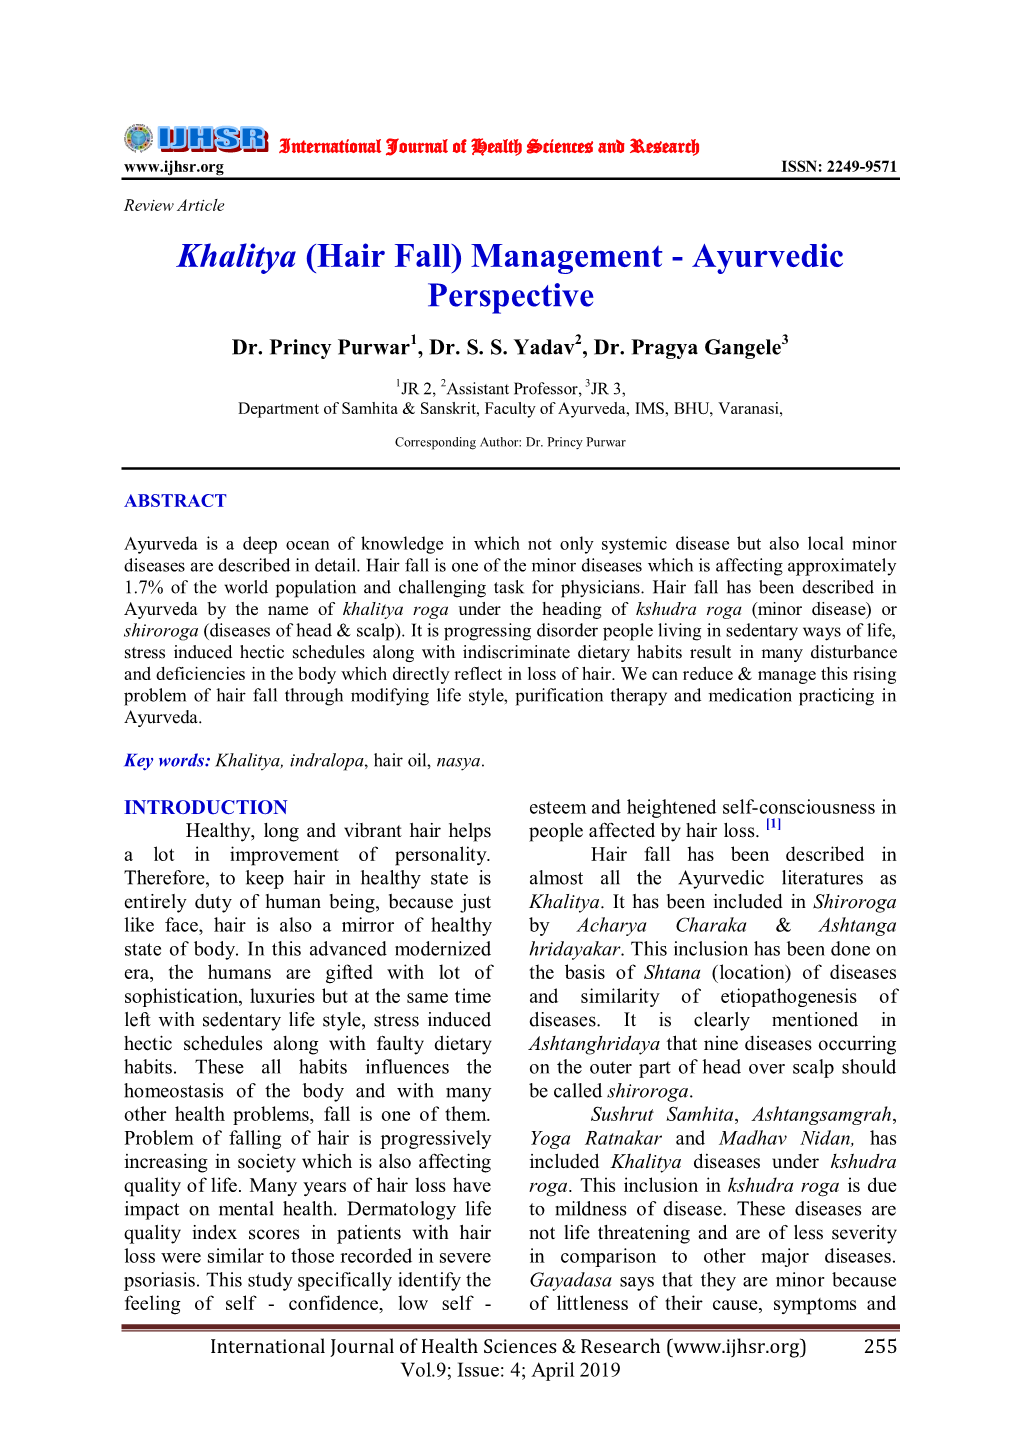 Hair Fall) Management - Ayurvedic Perspective